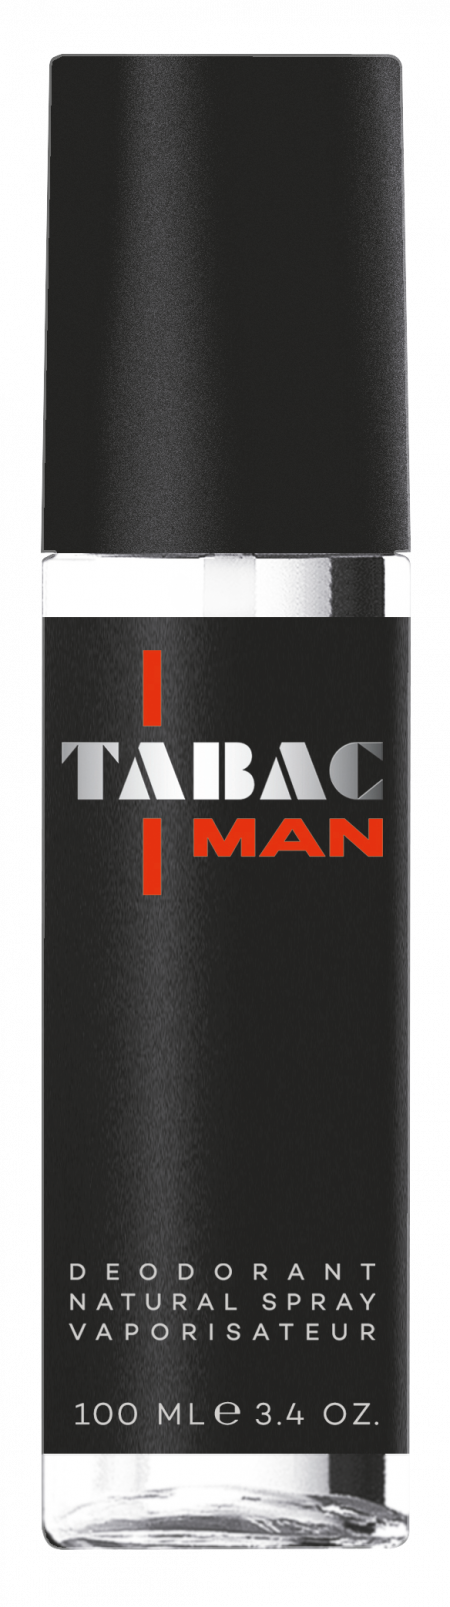 TABAC MAN Deodorant Natural Spray